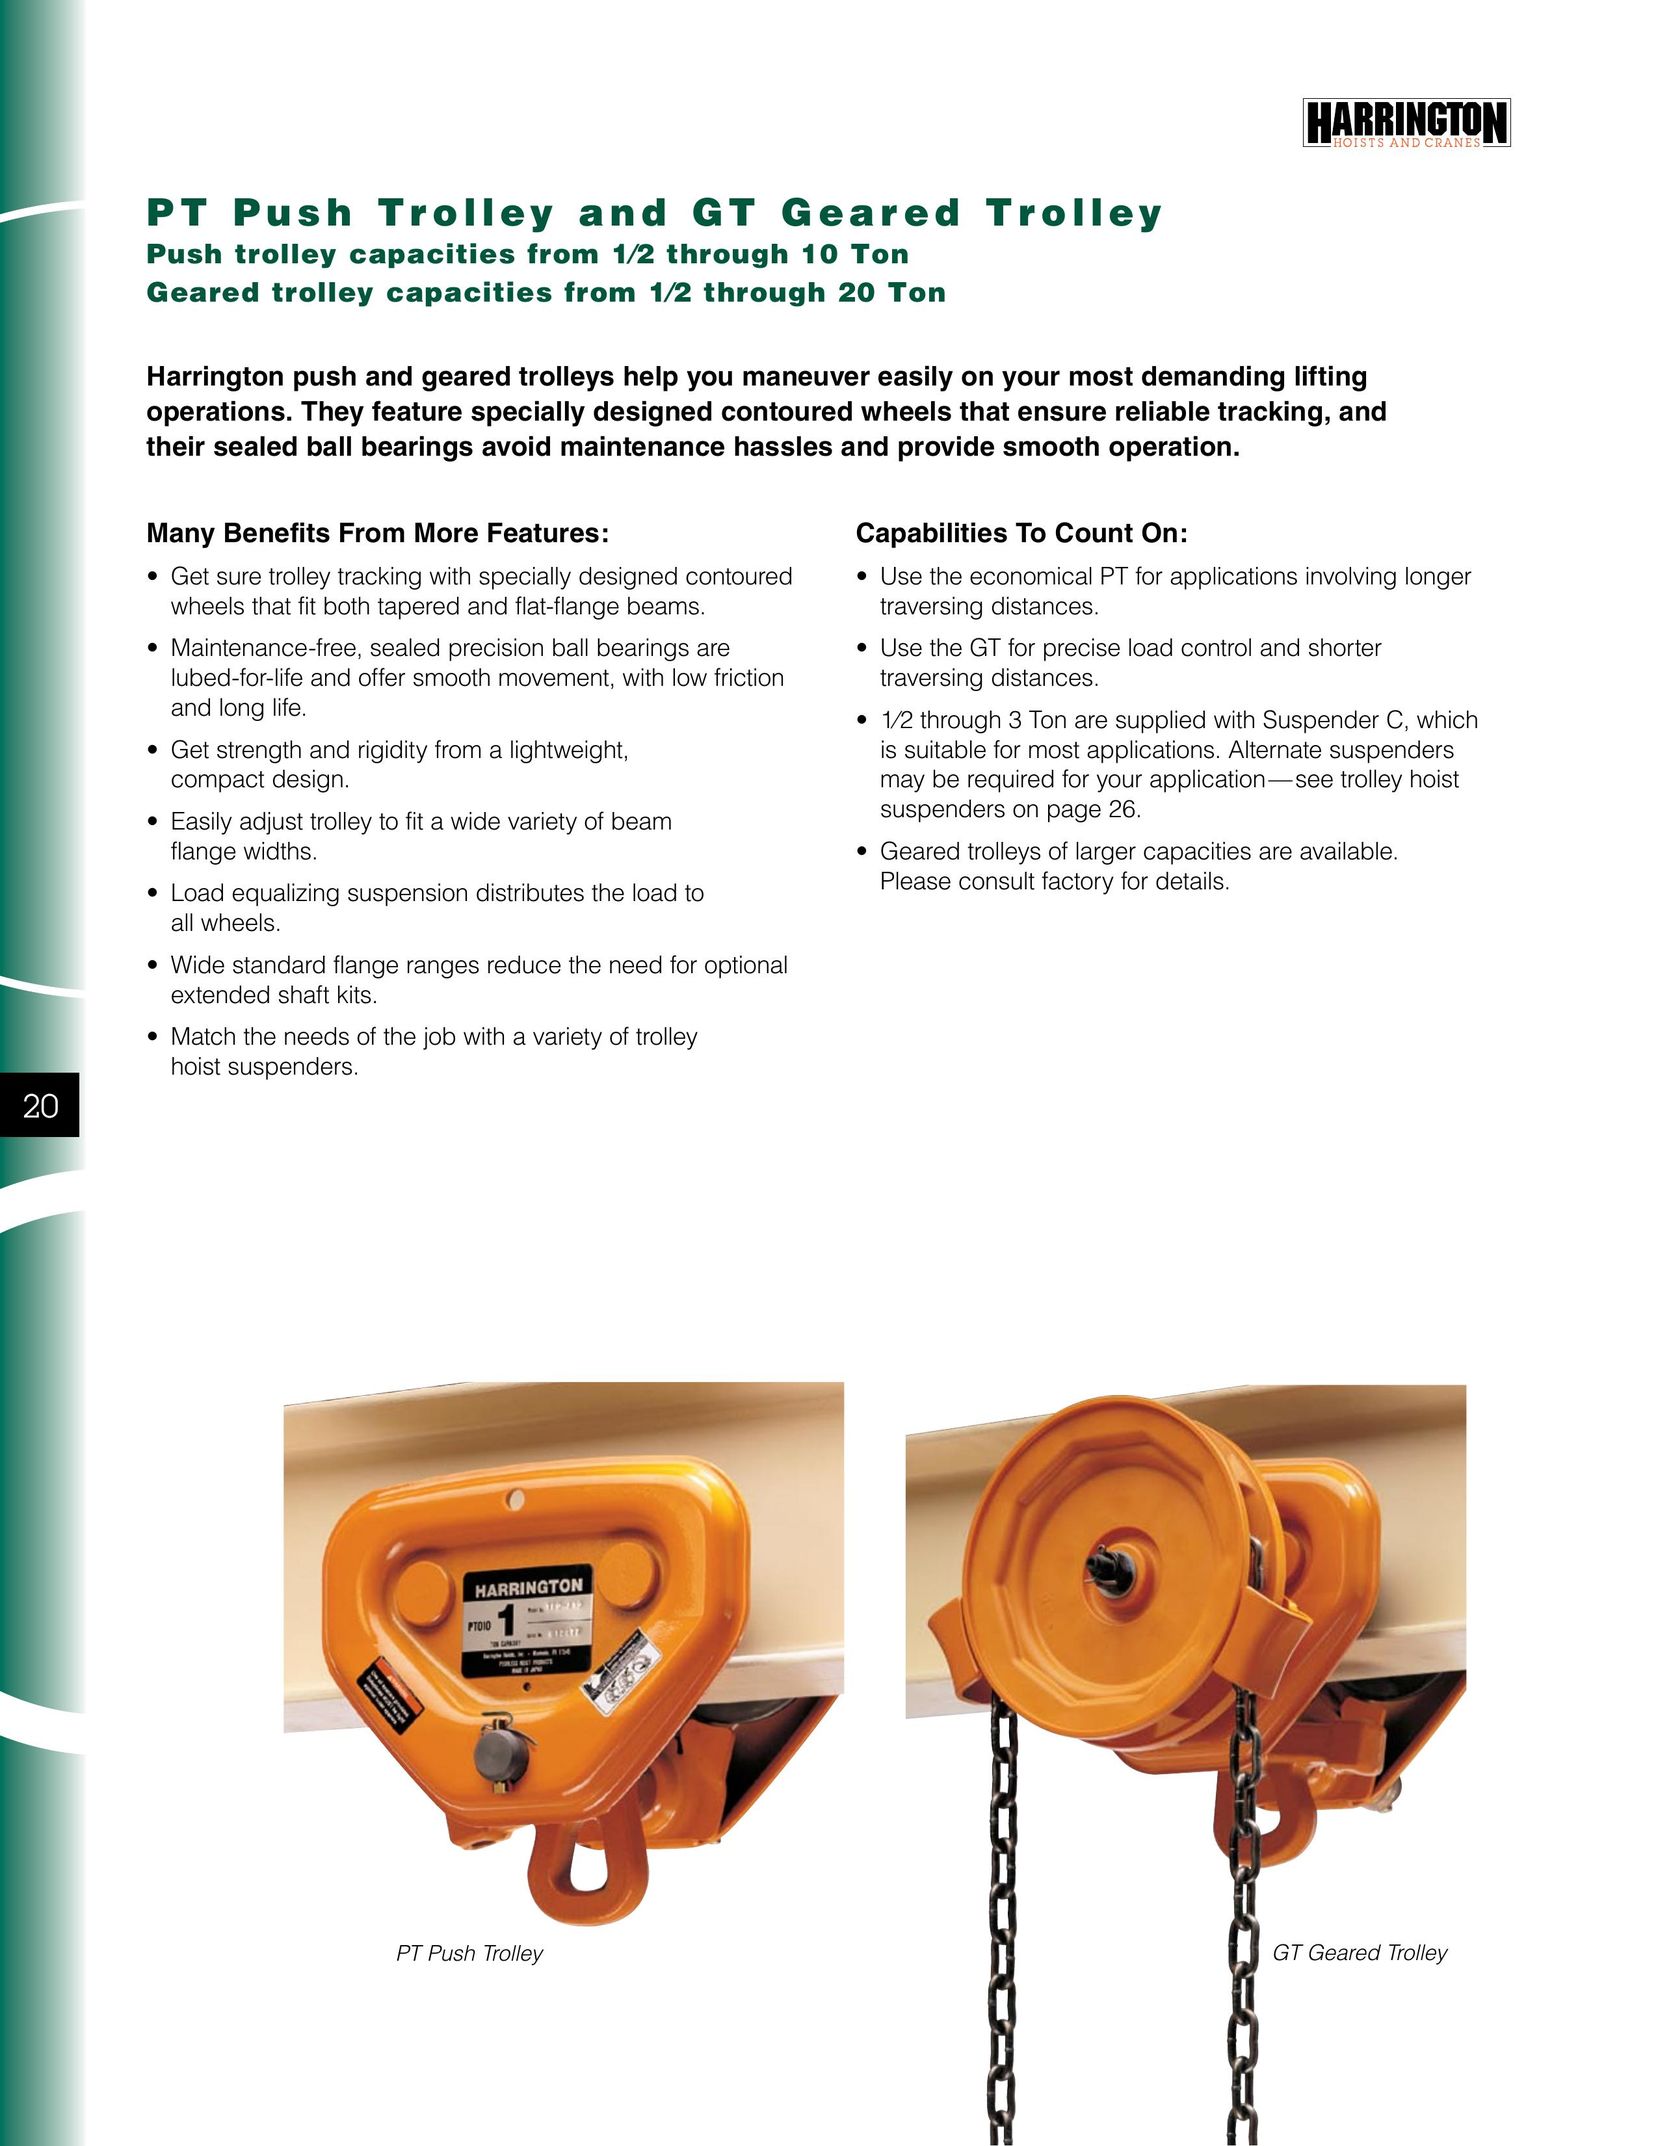 Harrington Hoists PT Push Trolley Fitness Equipment User Manual